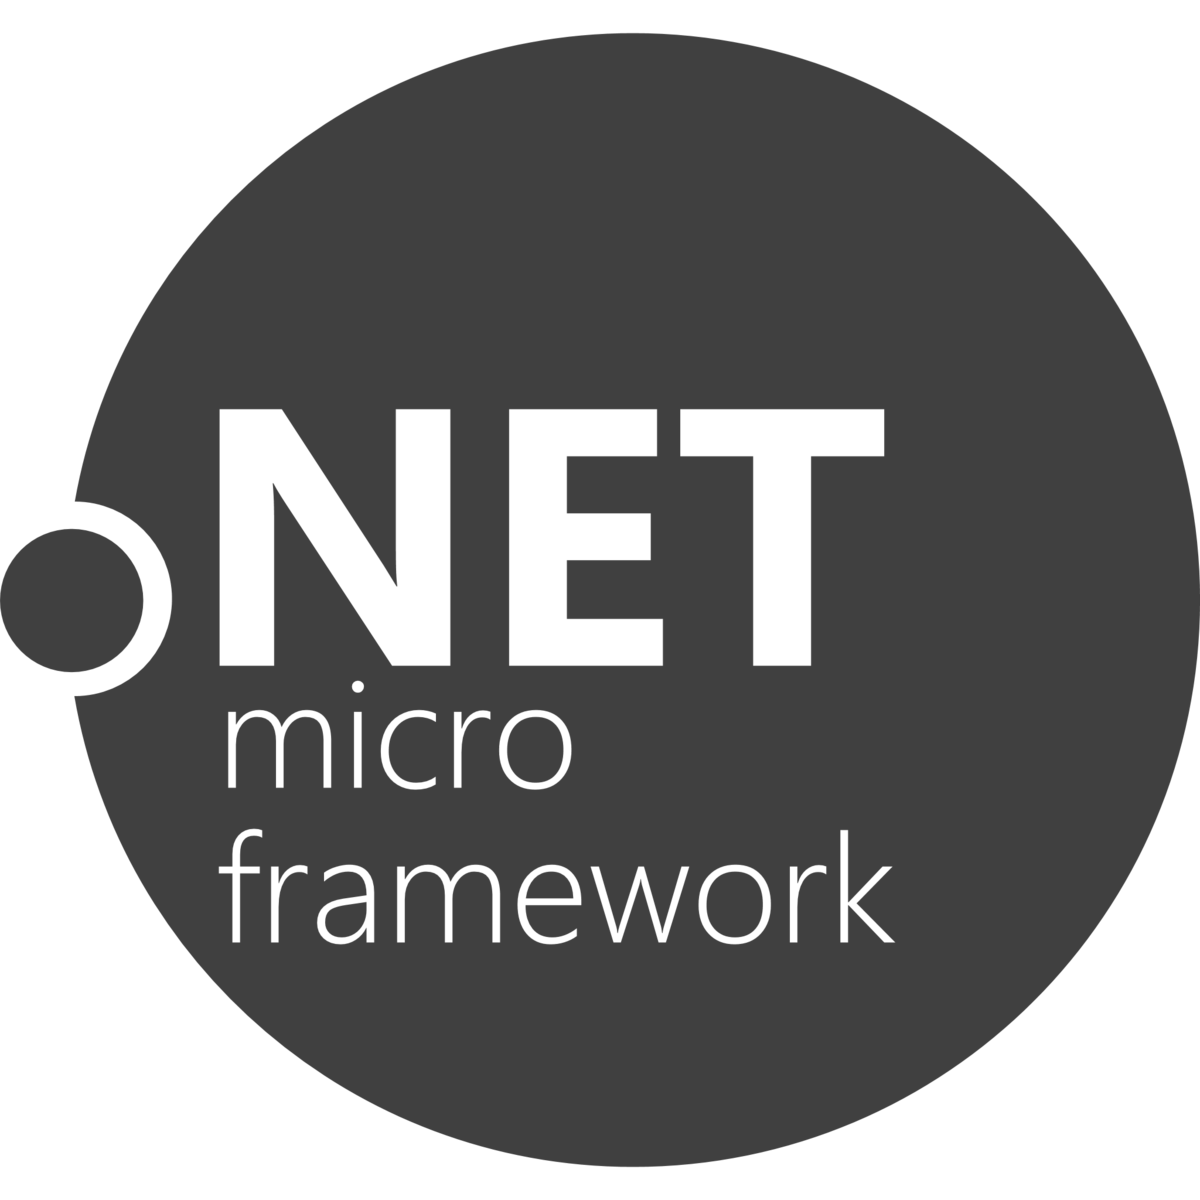 NET Micro Framework - Wikipedia